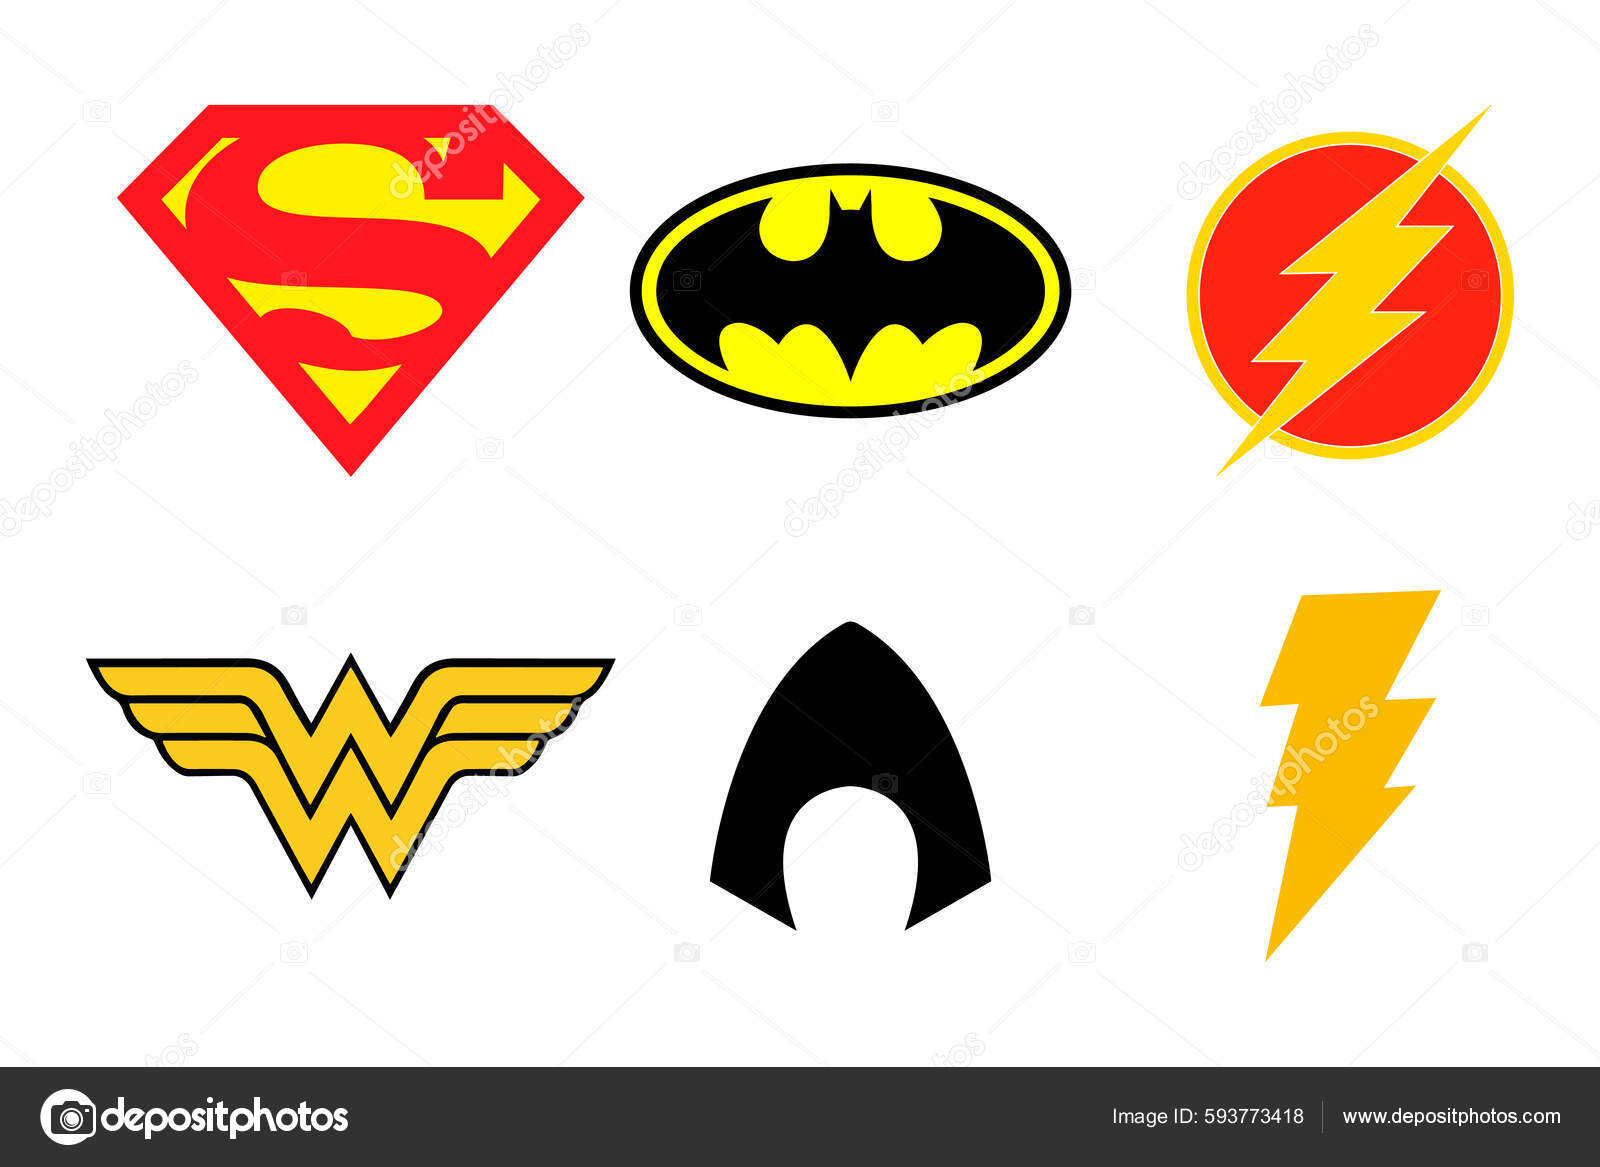 Batman logo Vector Art Stock Images | Depositphotos